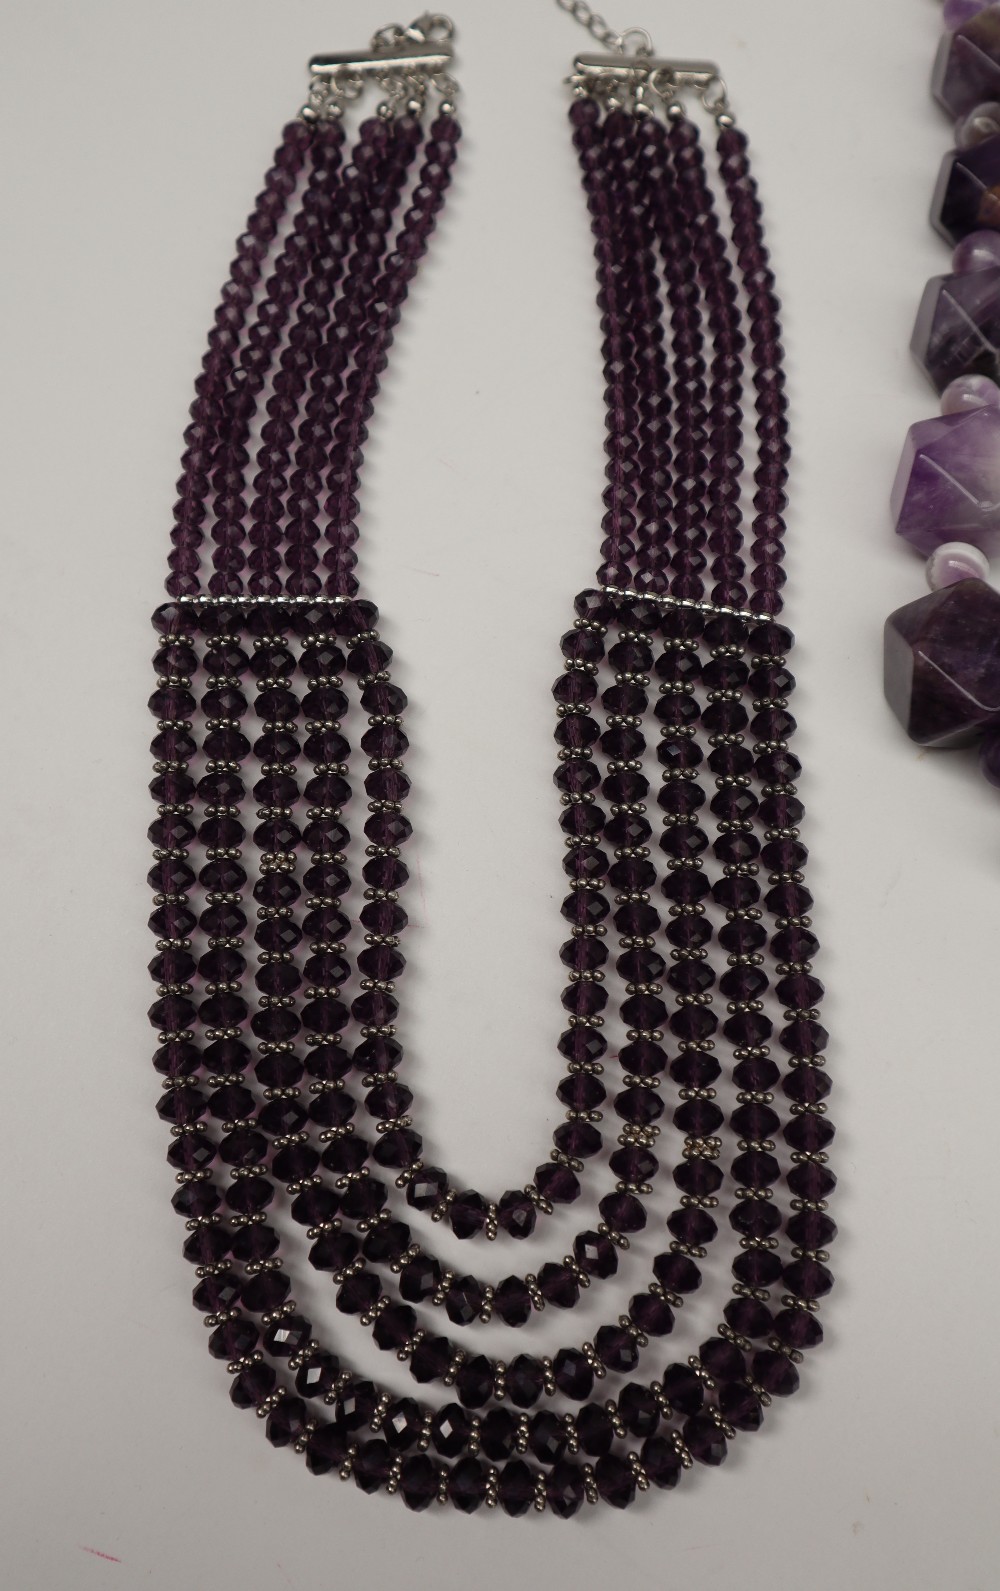 Amethyst set necklaces together with amethyst coloured bracelets etc - Image 2 of 7